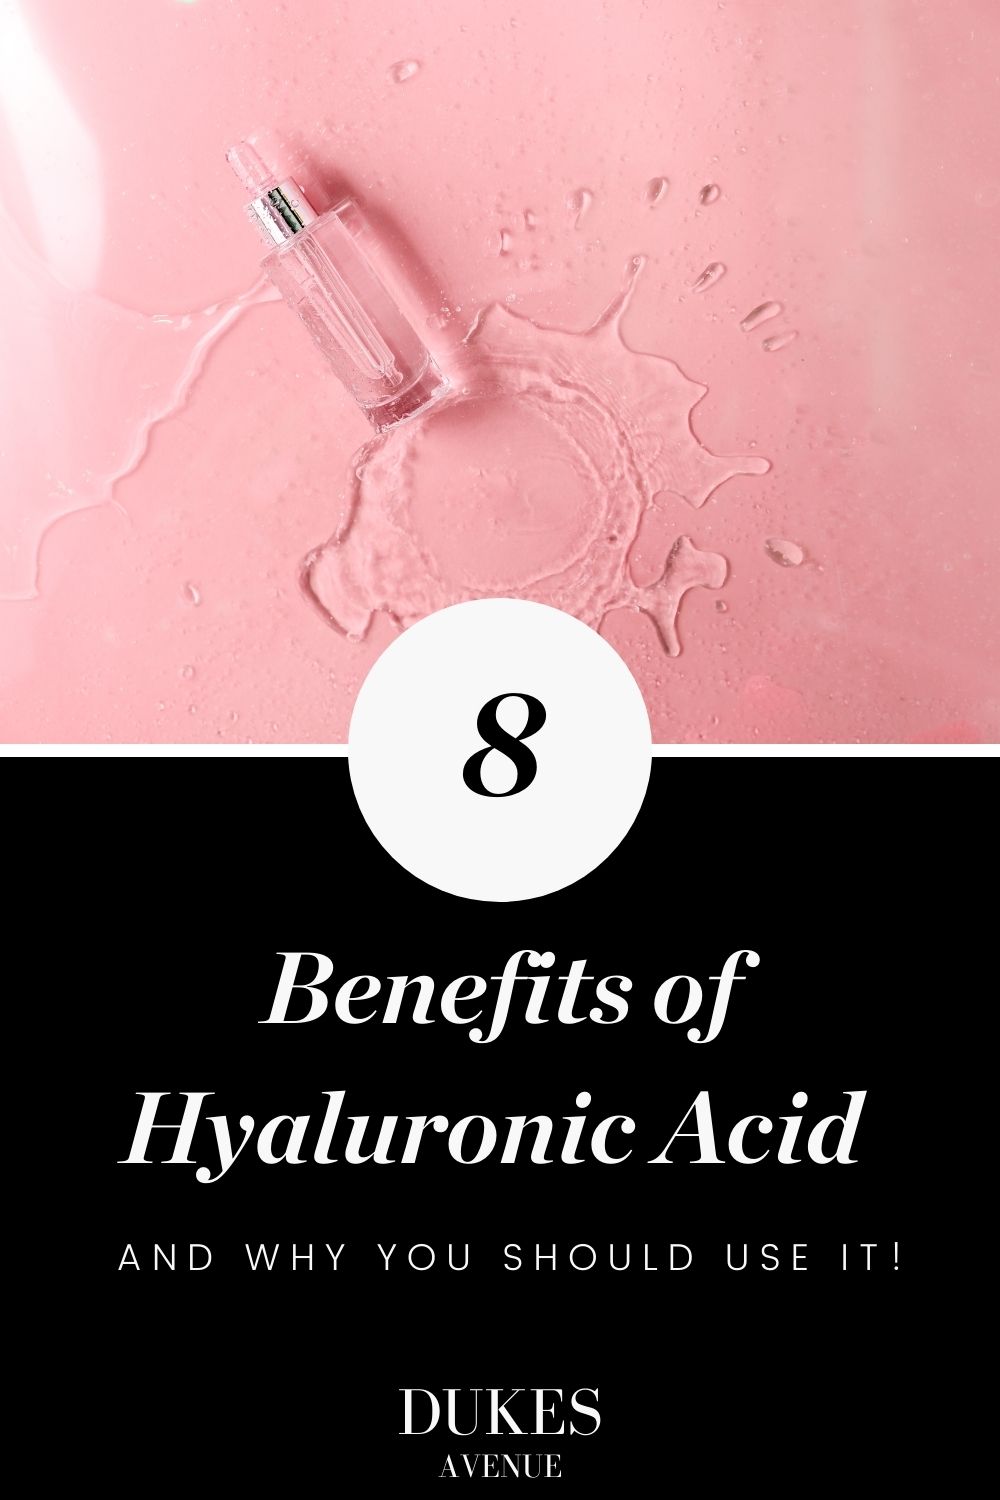 Hyaluronic Acid Skin Benefits Pin 1 Dukes Avenue